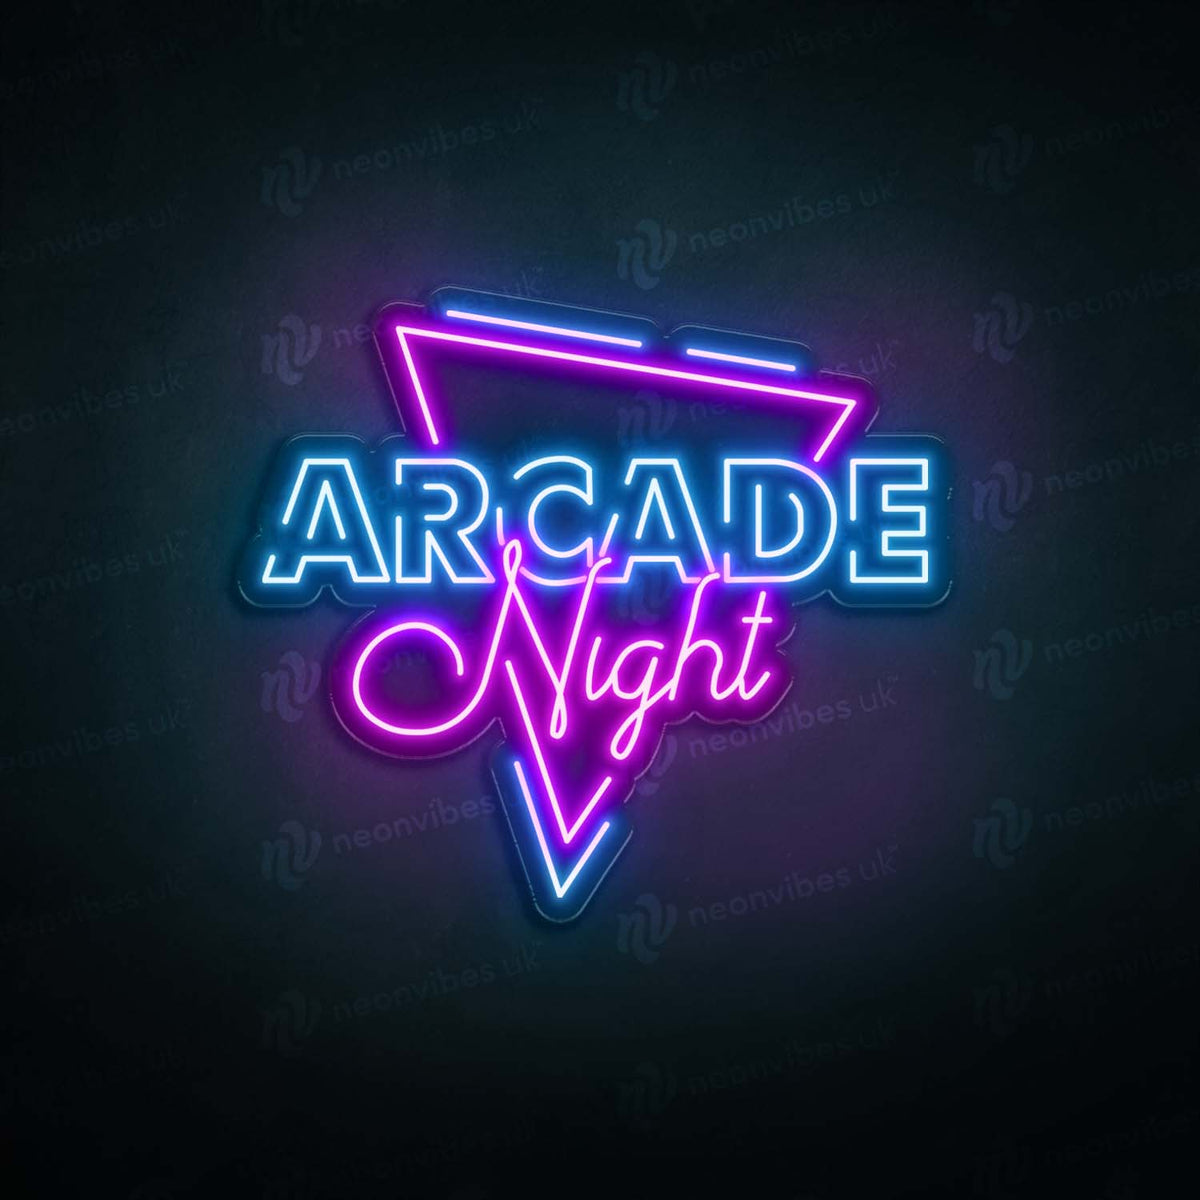 Arcade Night neon sign